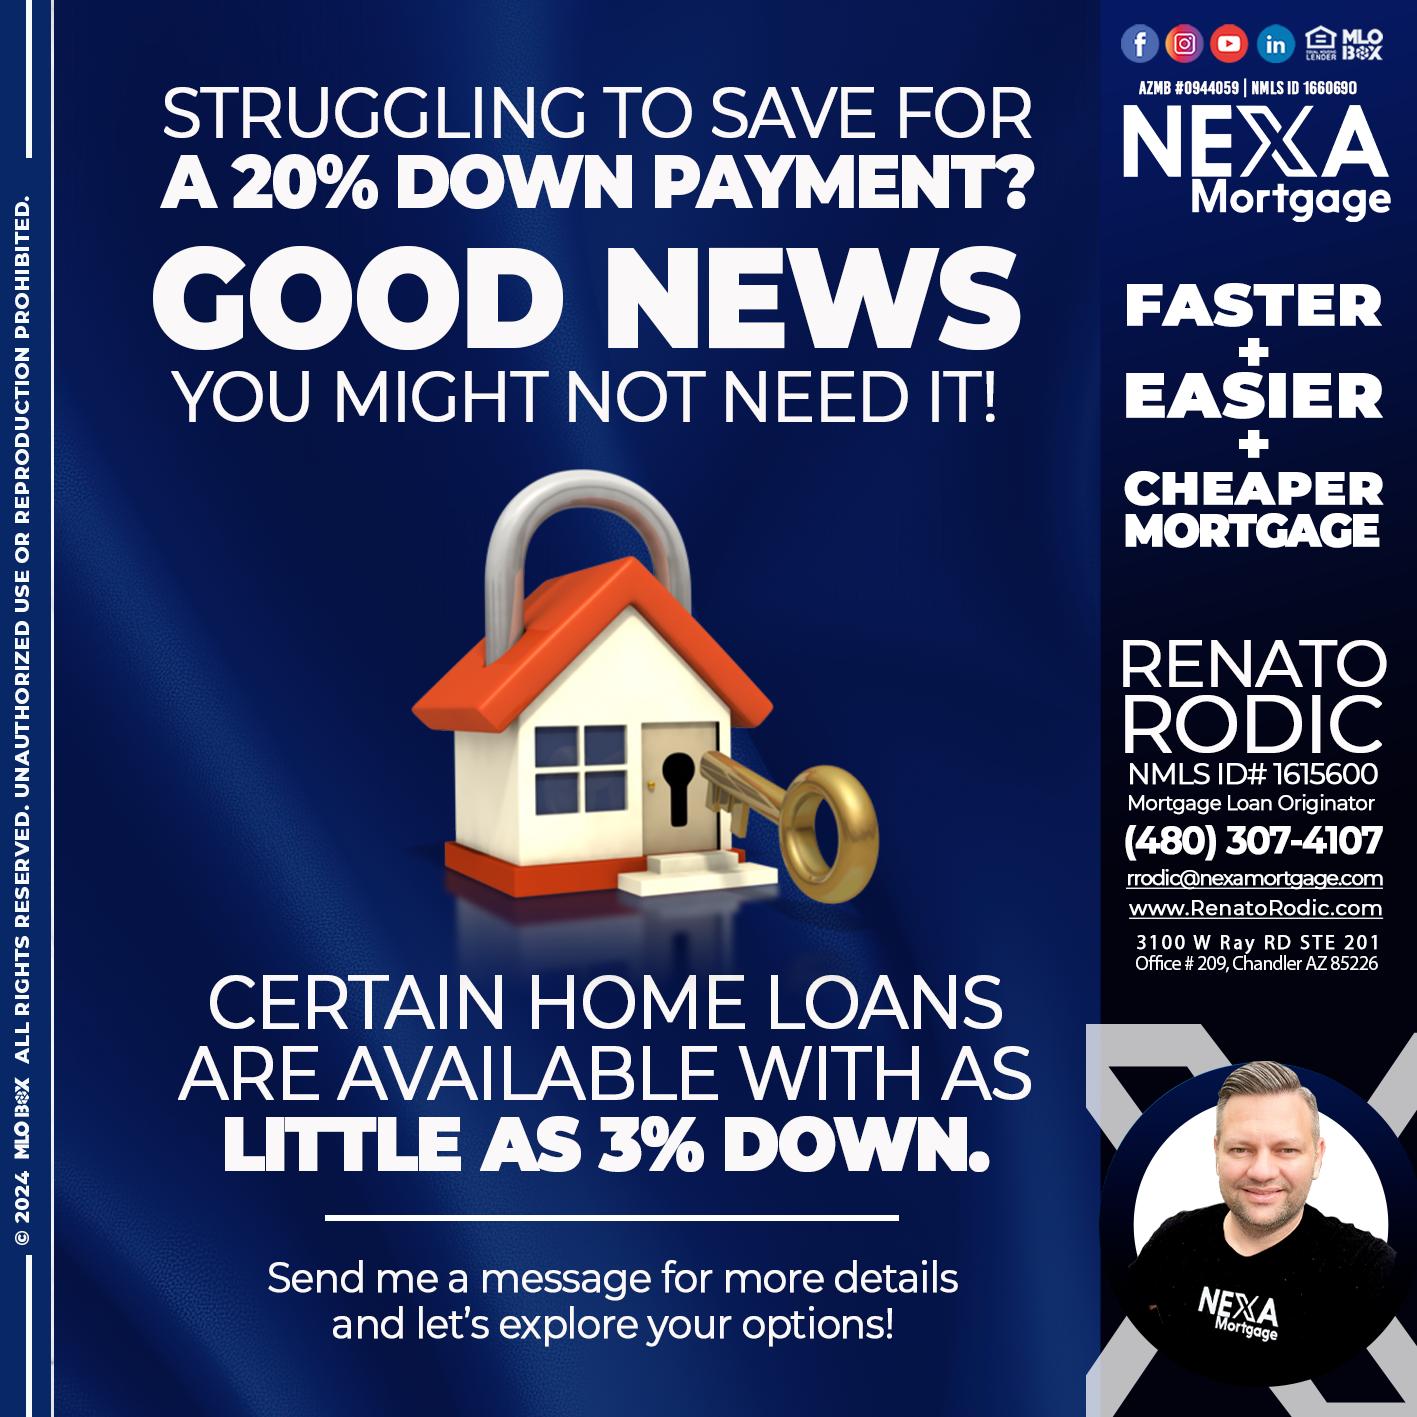 good news - Renato Rodic -Mortgage Loan Originator